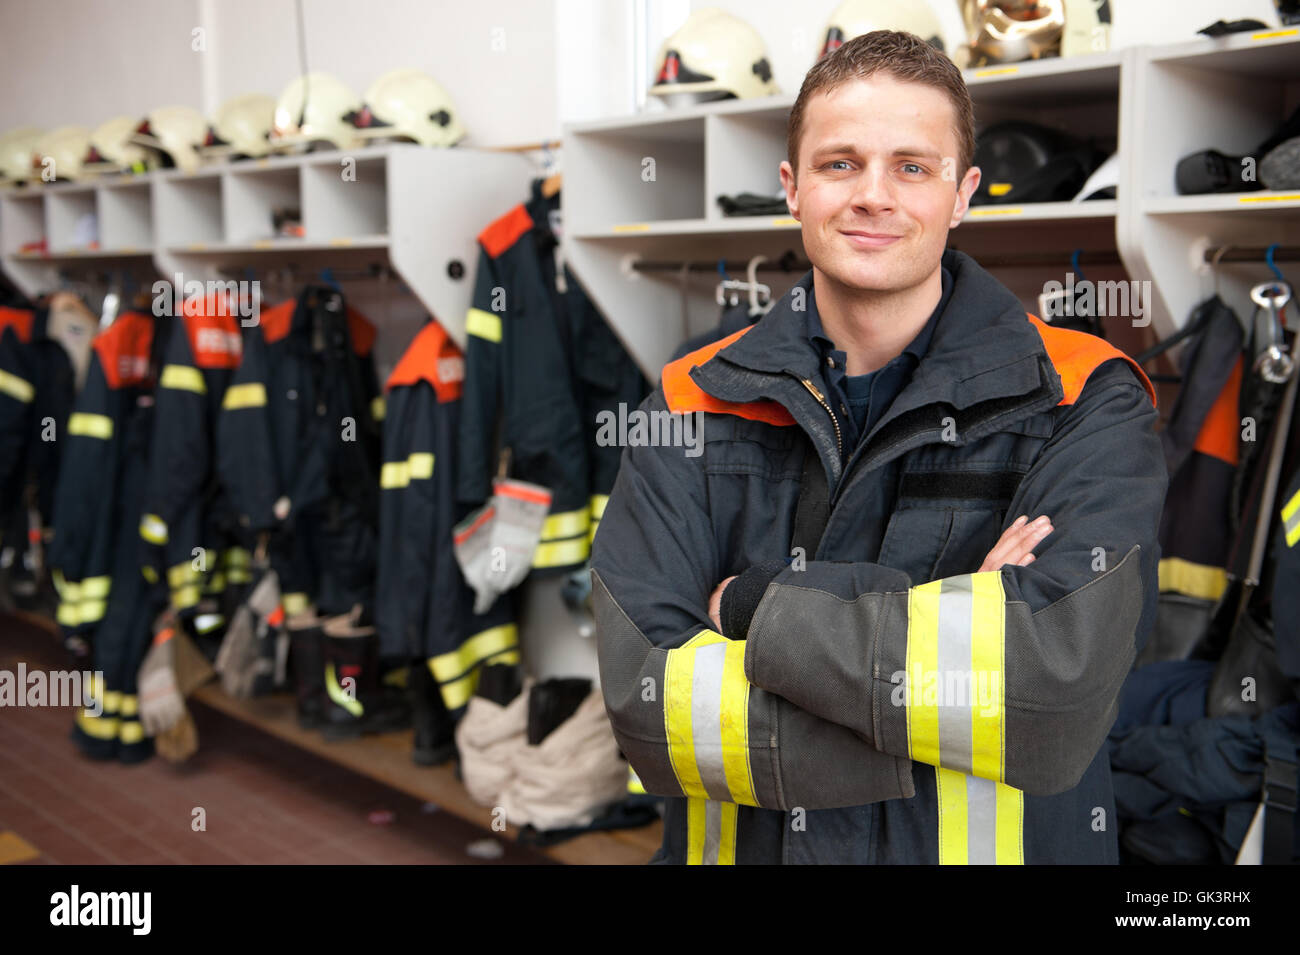 firefighter Stock Photo